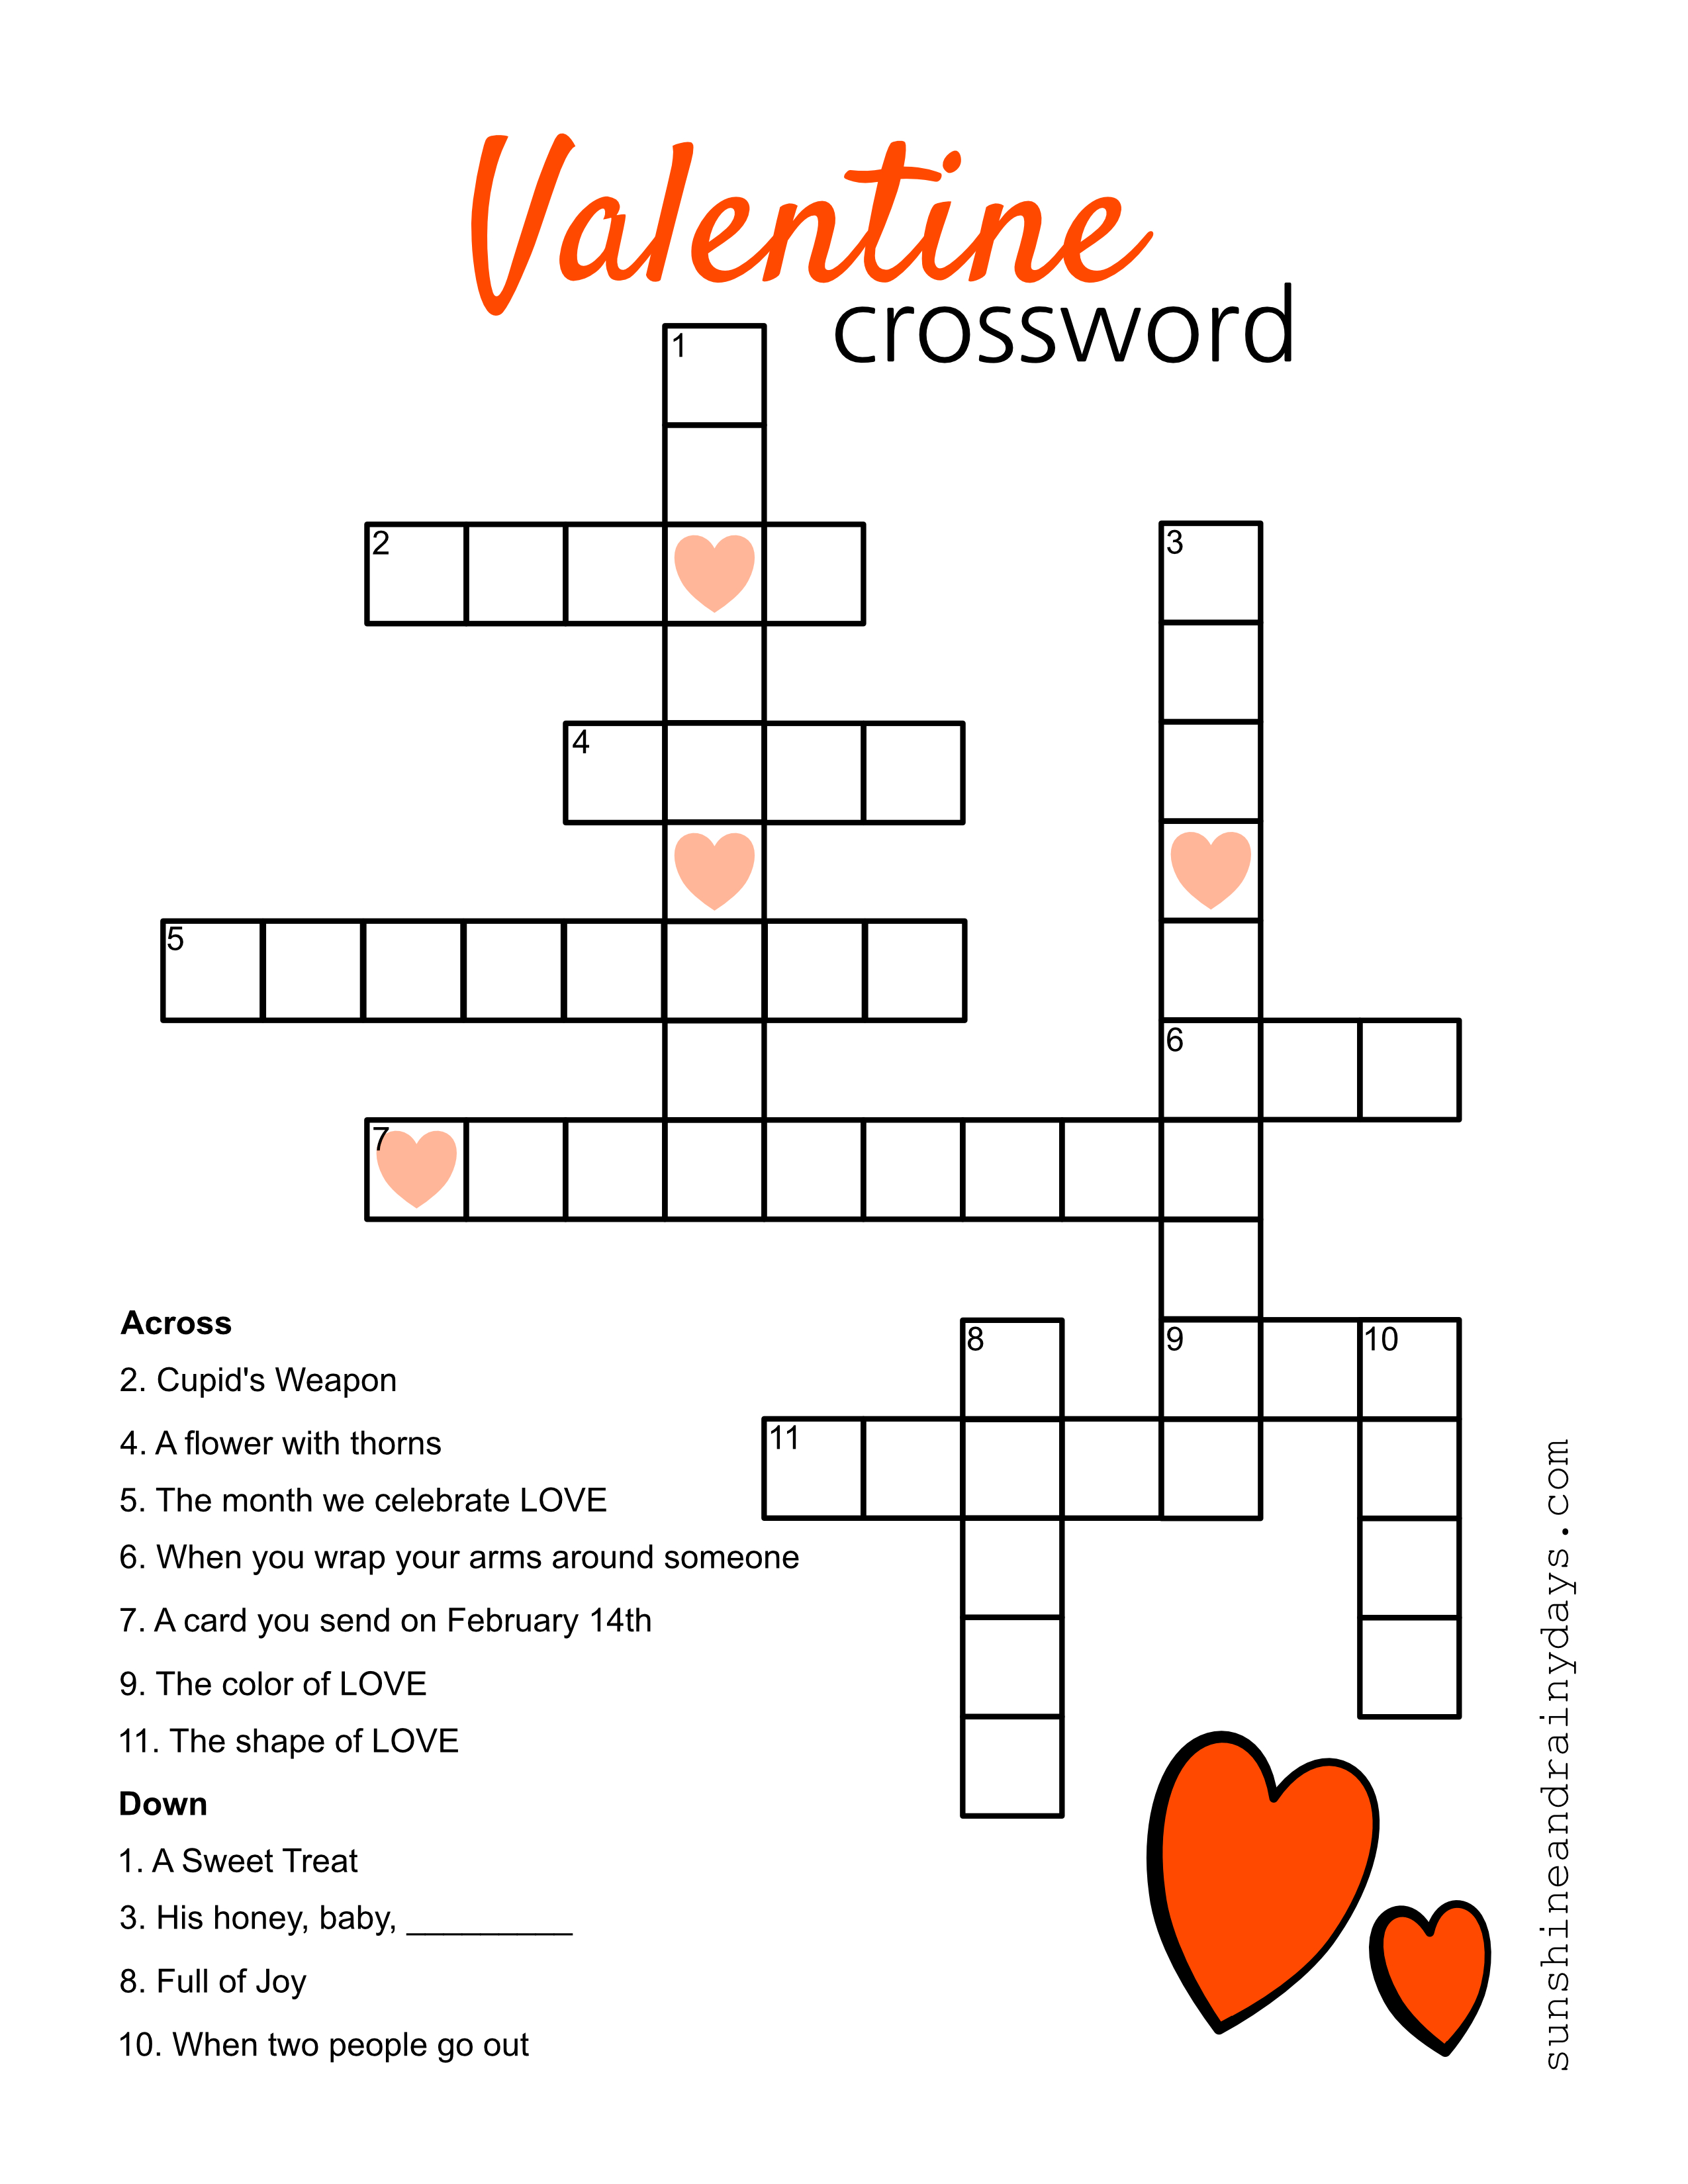 Valentine Crossword Puzzle - Sunshine And Rainy Days - Printable Valentine Crossword Puzzles